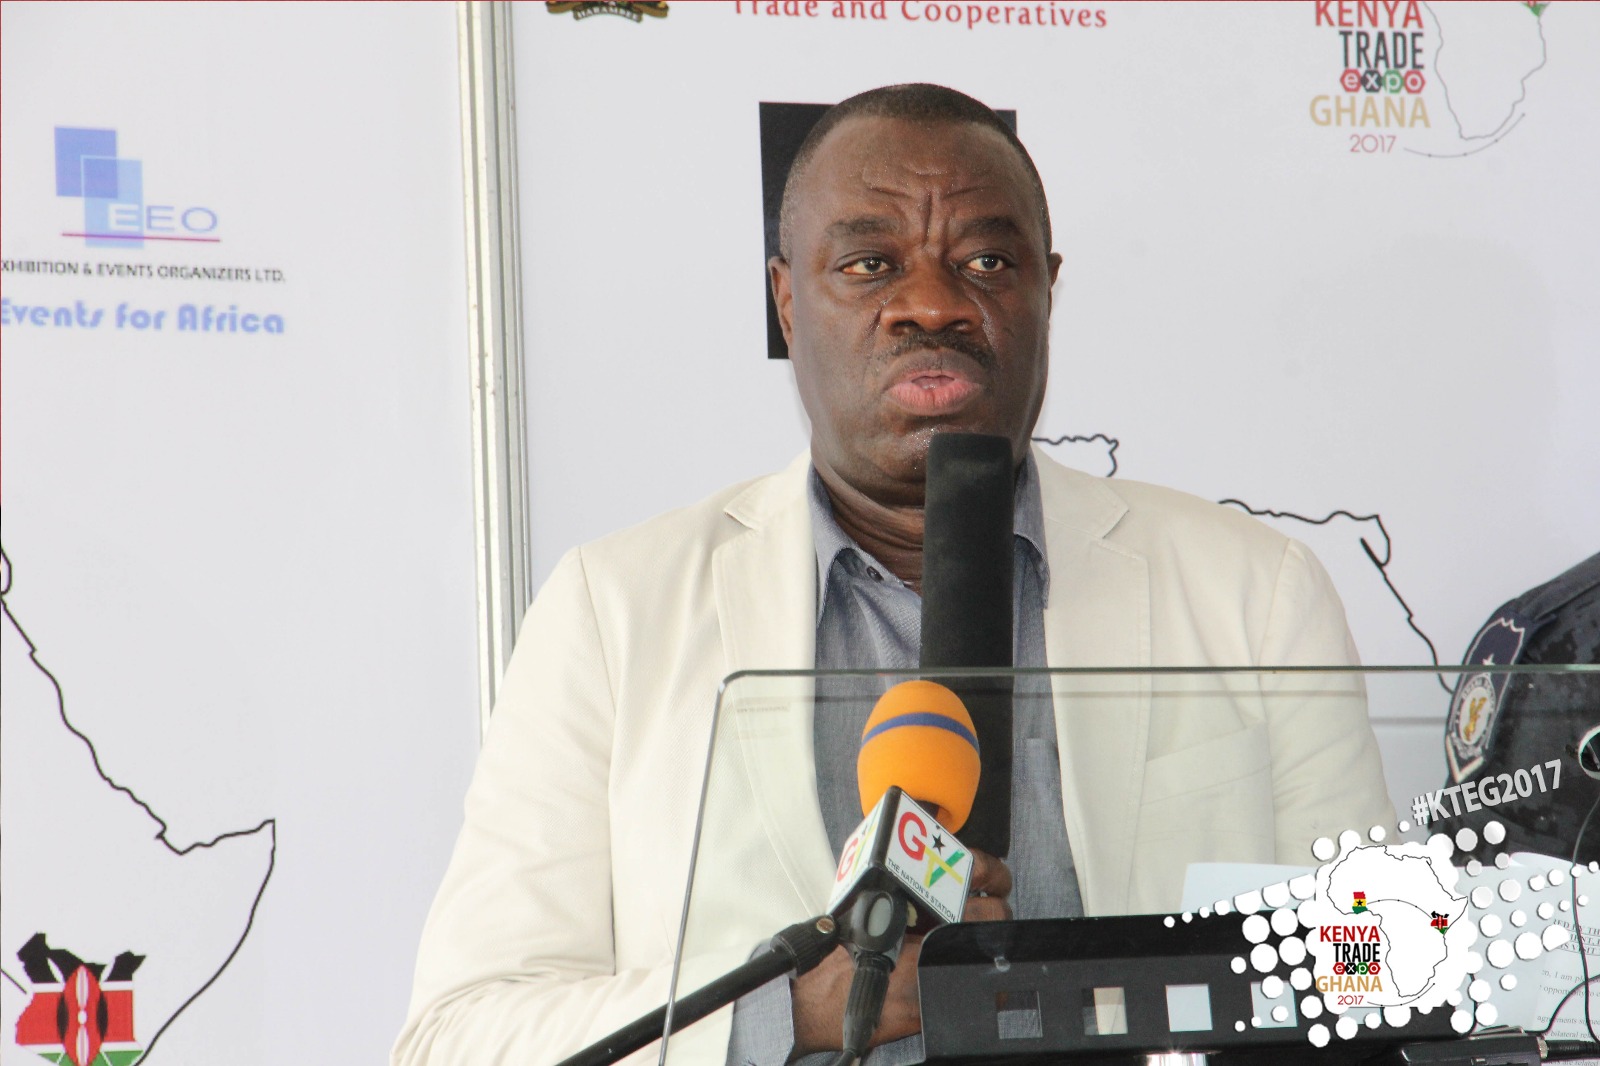 Kenya Trade Expo Ghana gets boost from AWAL, Govt.